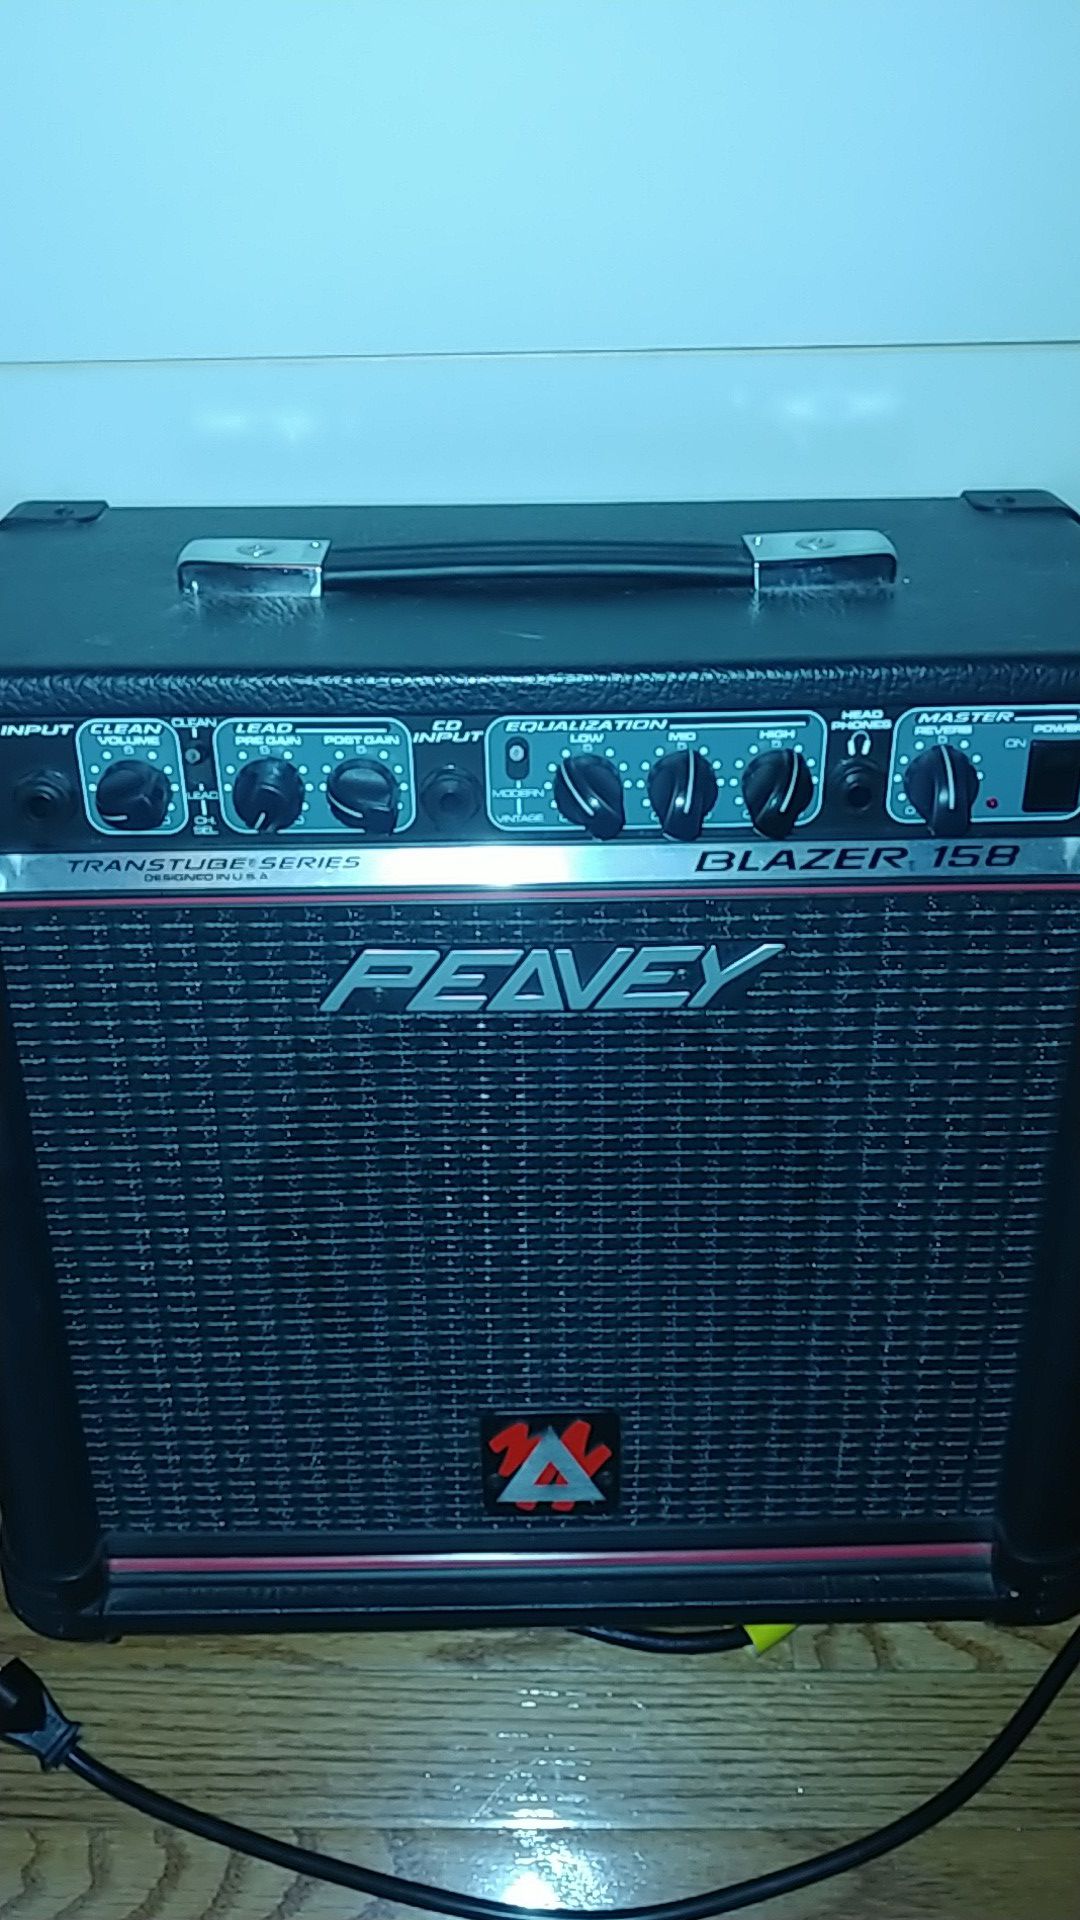 Guitar amplifier peavey